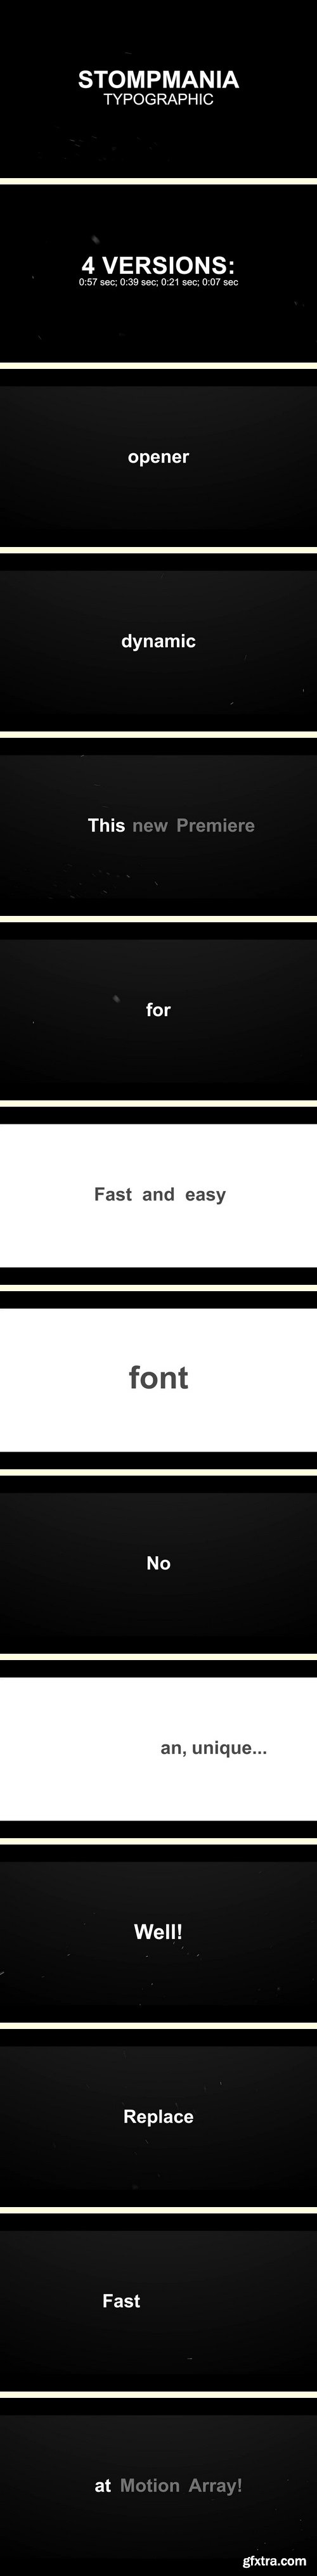 MotionArray - Typographic Stomp Opener Pack Premiere Pro Templates 58492